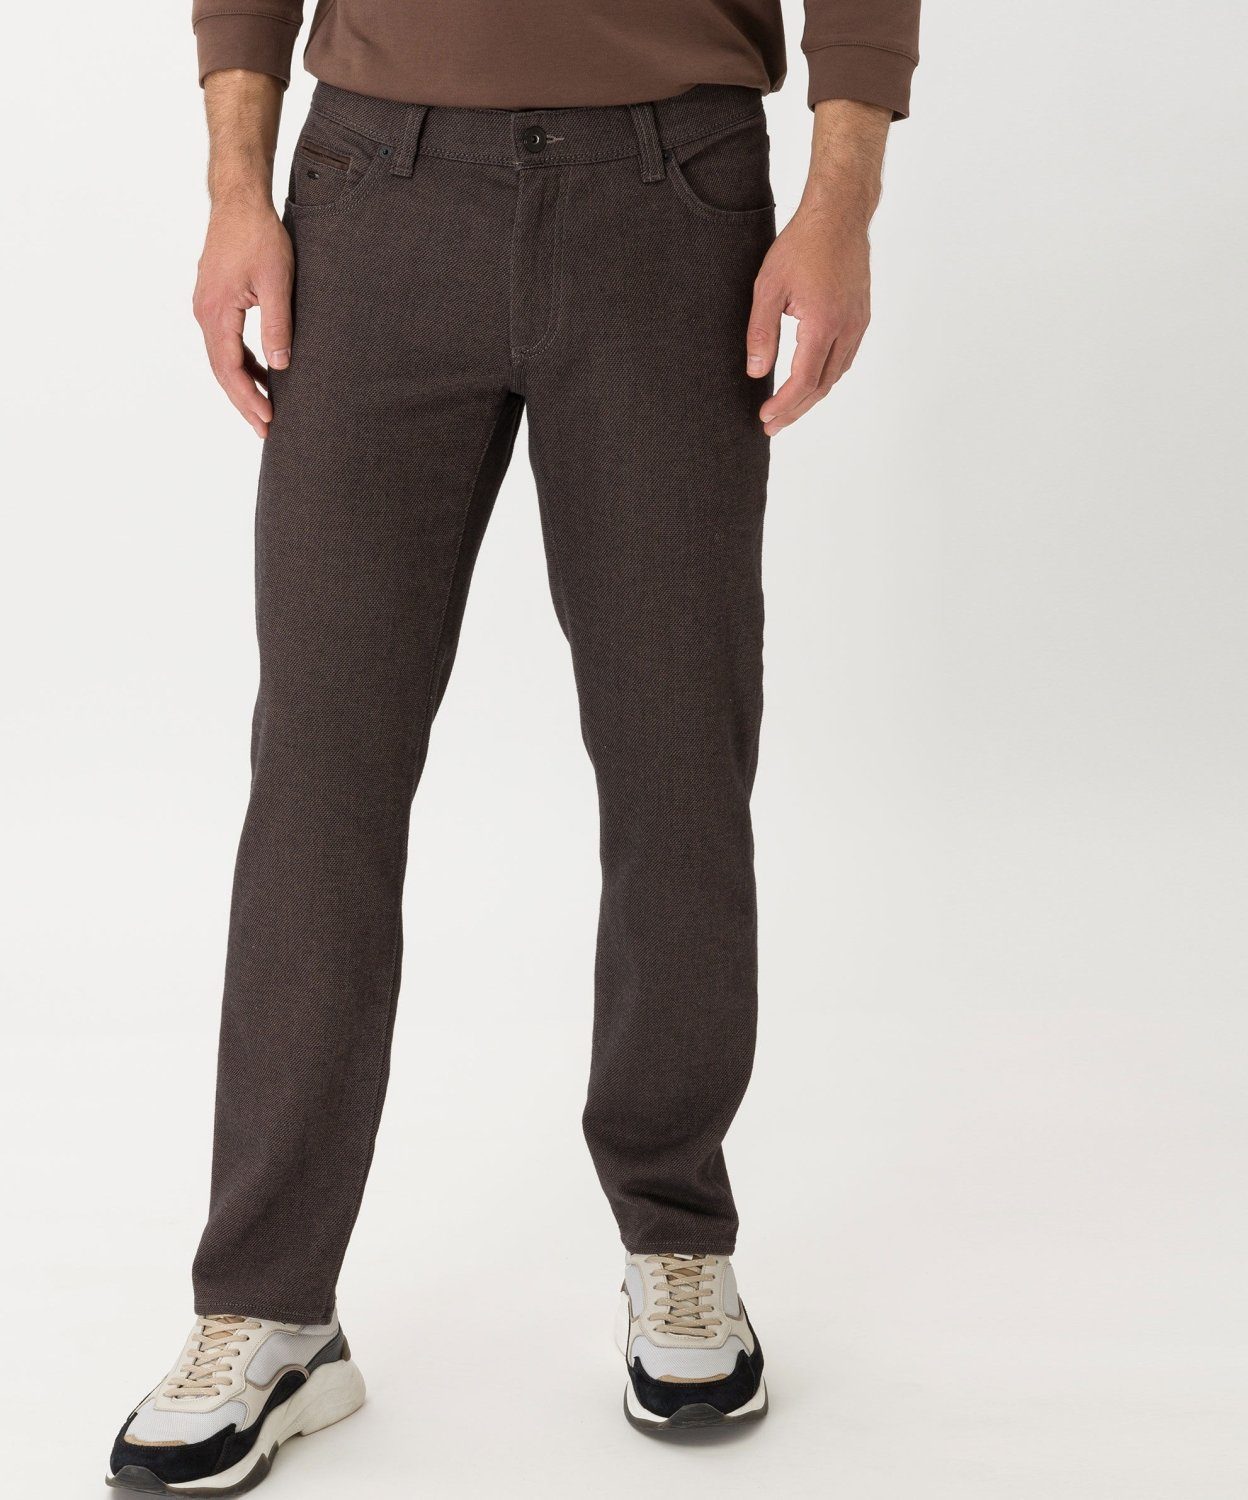 STYLE.CADIZ Brax dark brown 5-Pocket-Jeans C